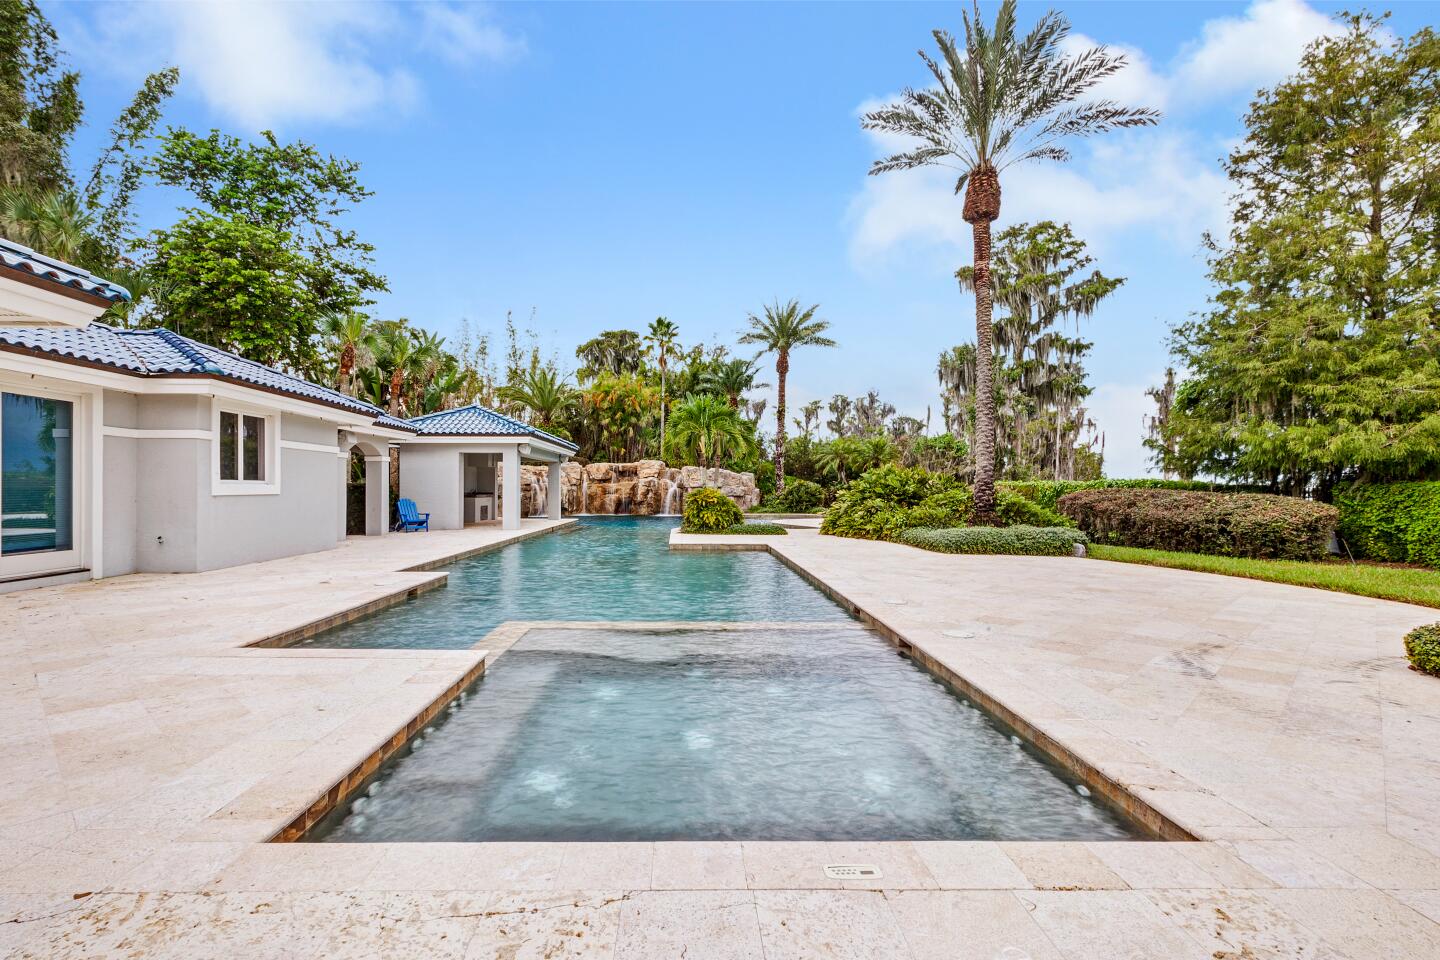 Shaq's Florida estate: the pool